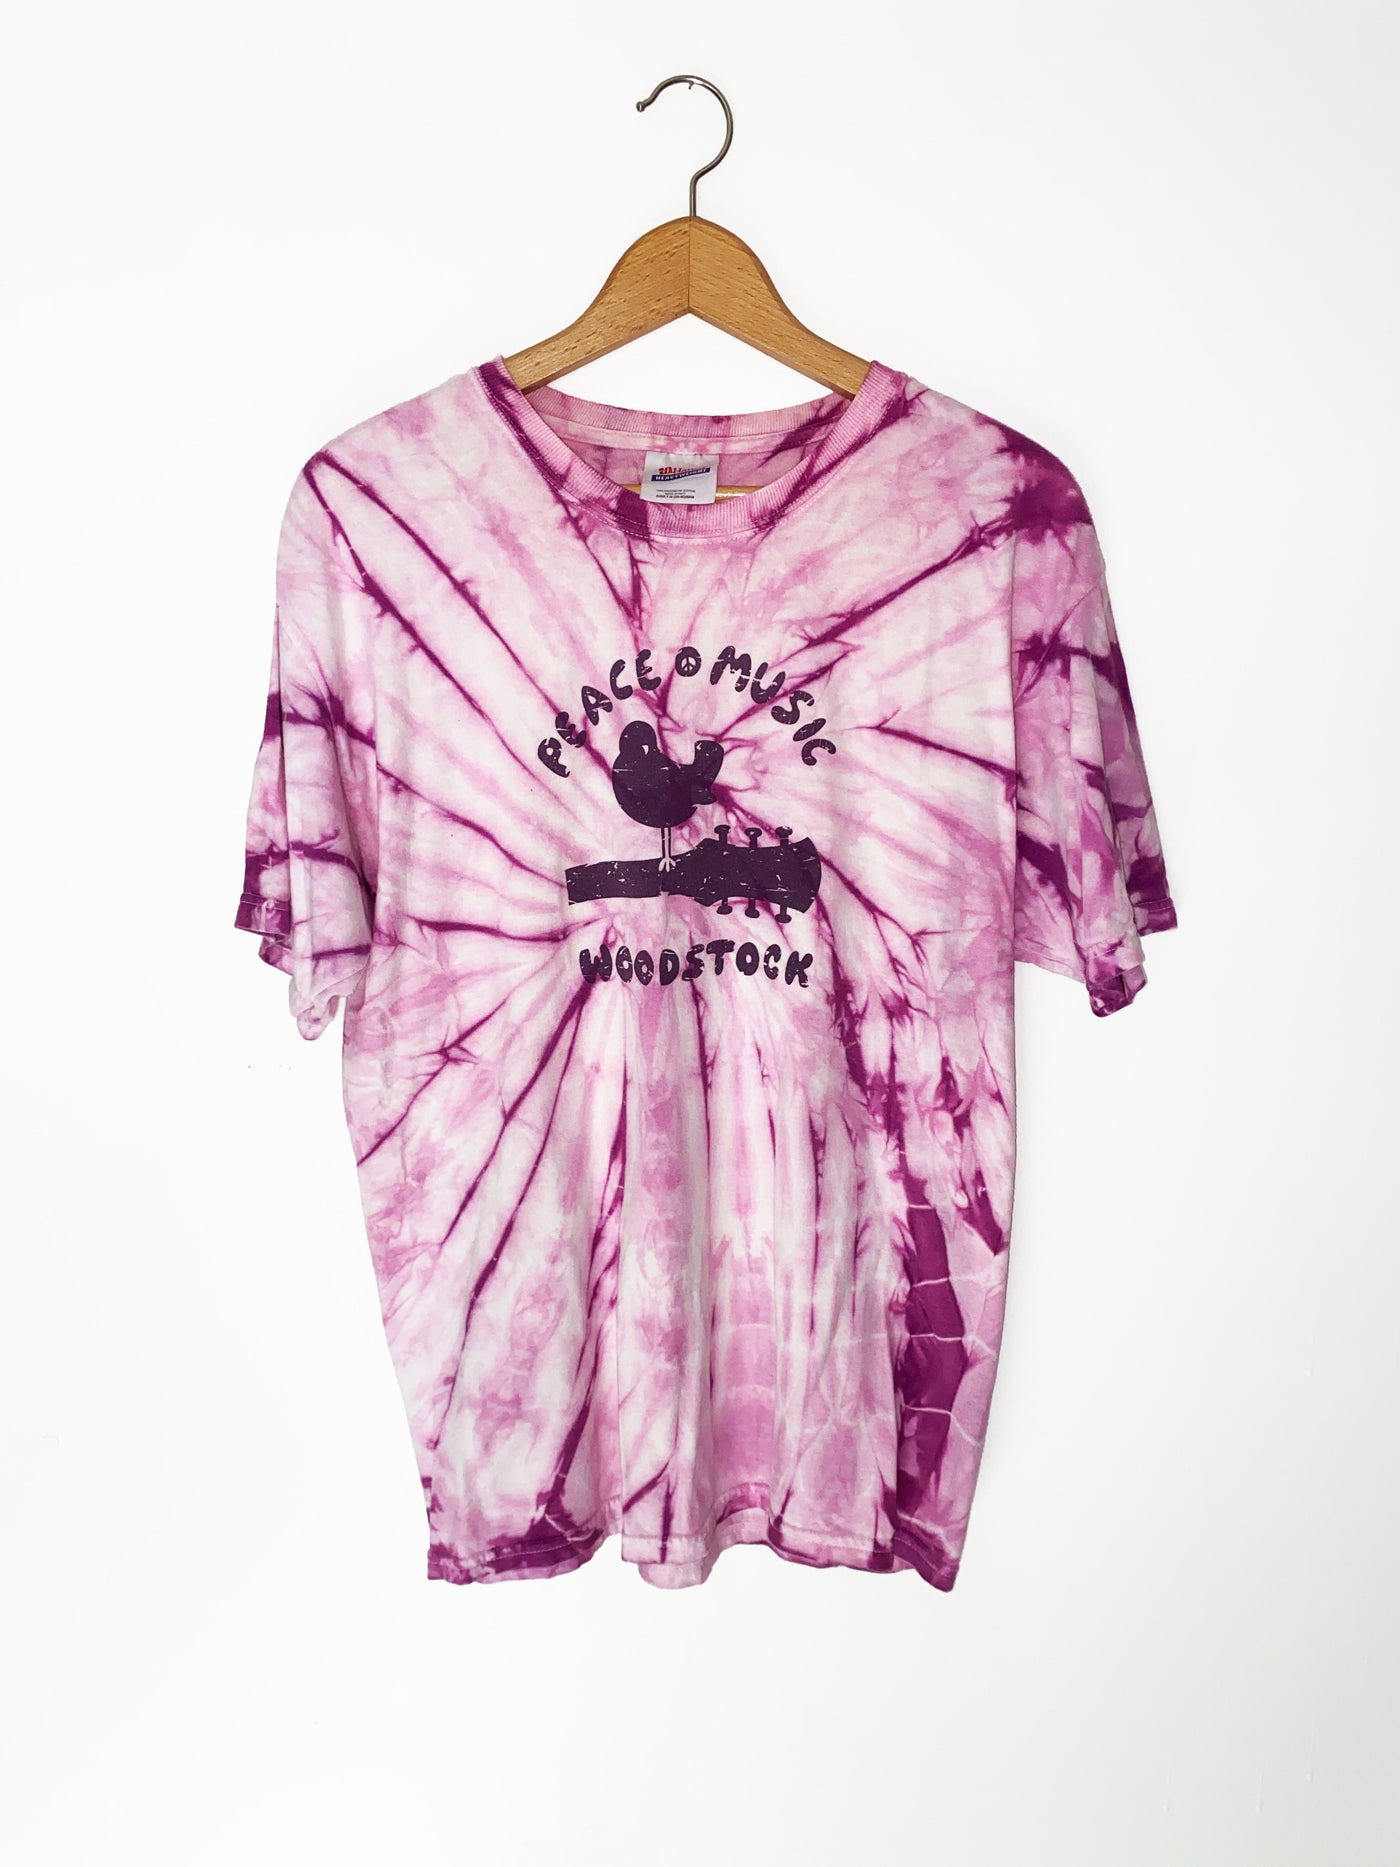 Vintage Peace & Music Woodstock T-Shirt